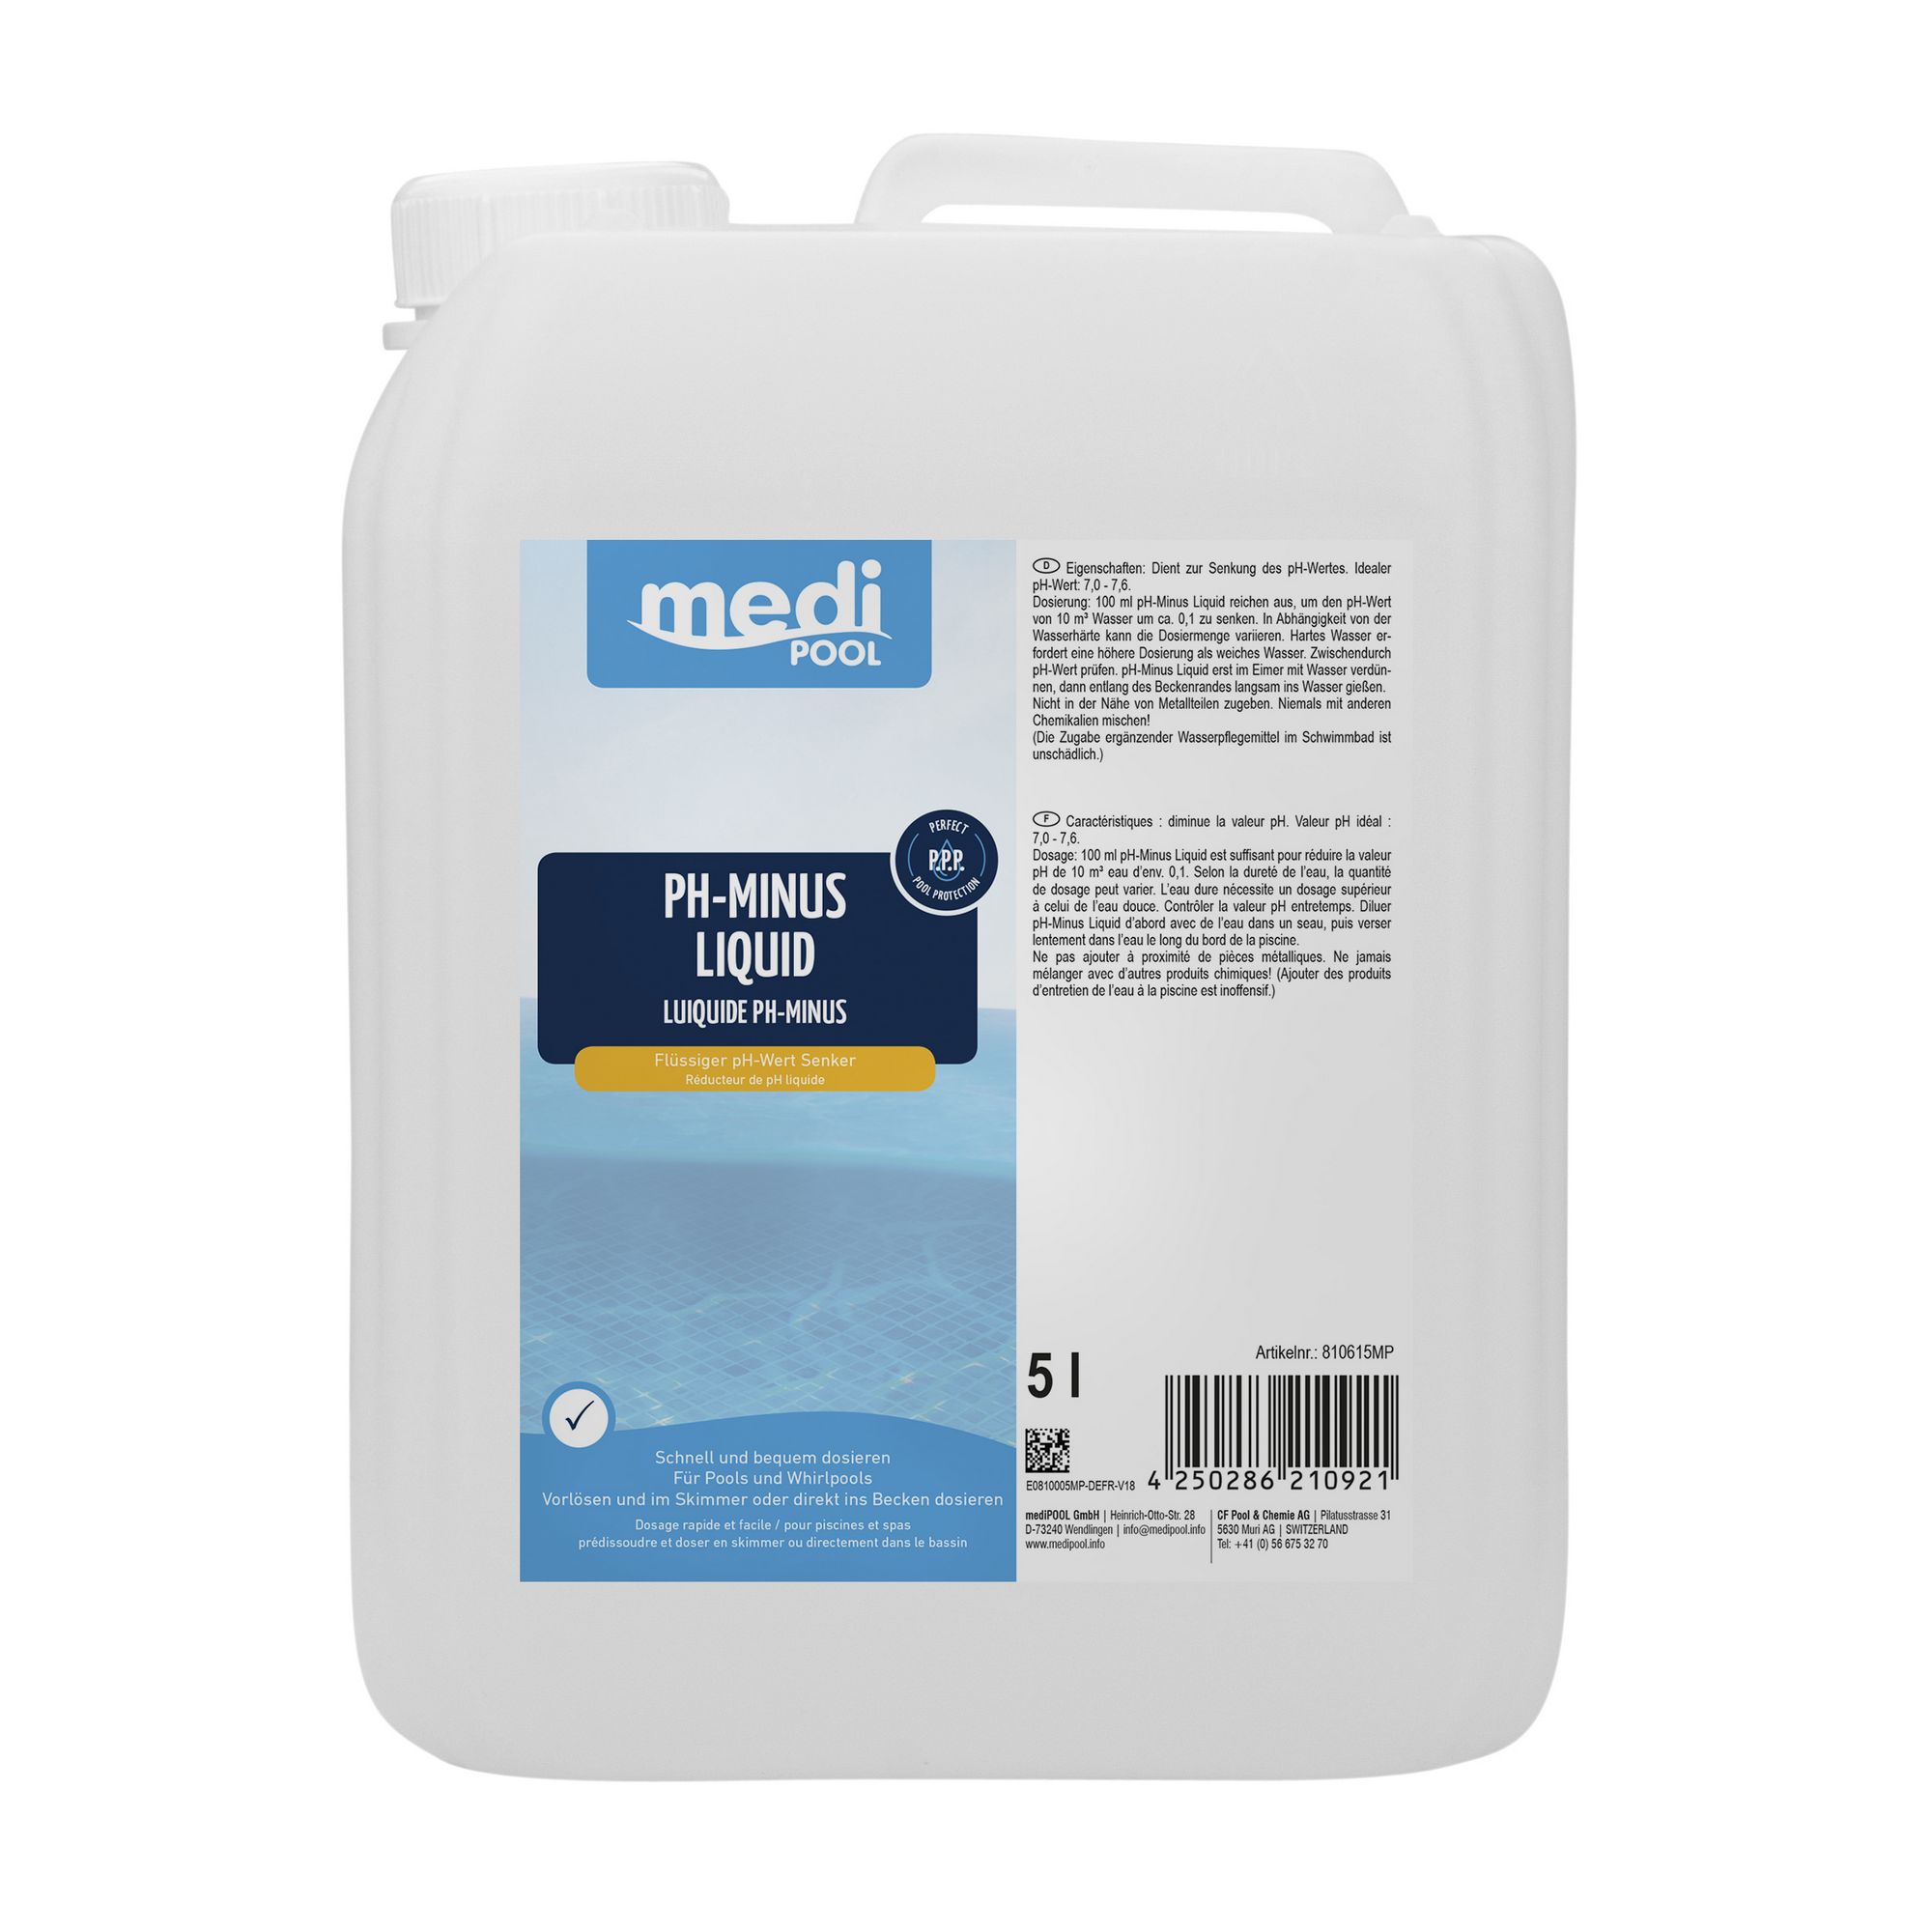 pH-Minus Liquid 5 Liter, für die Poolpflege + product picture